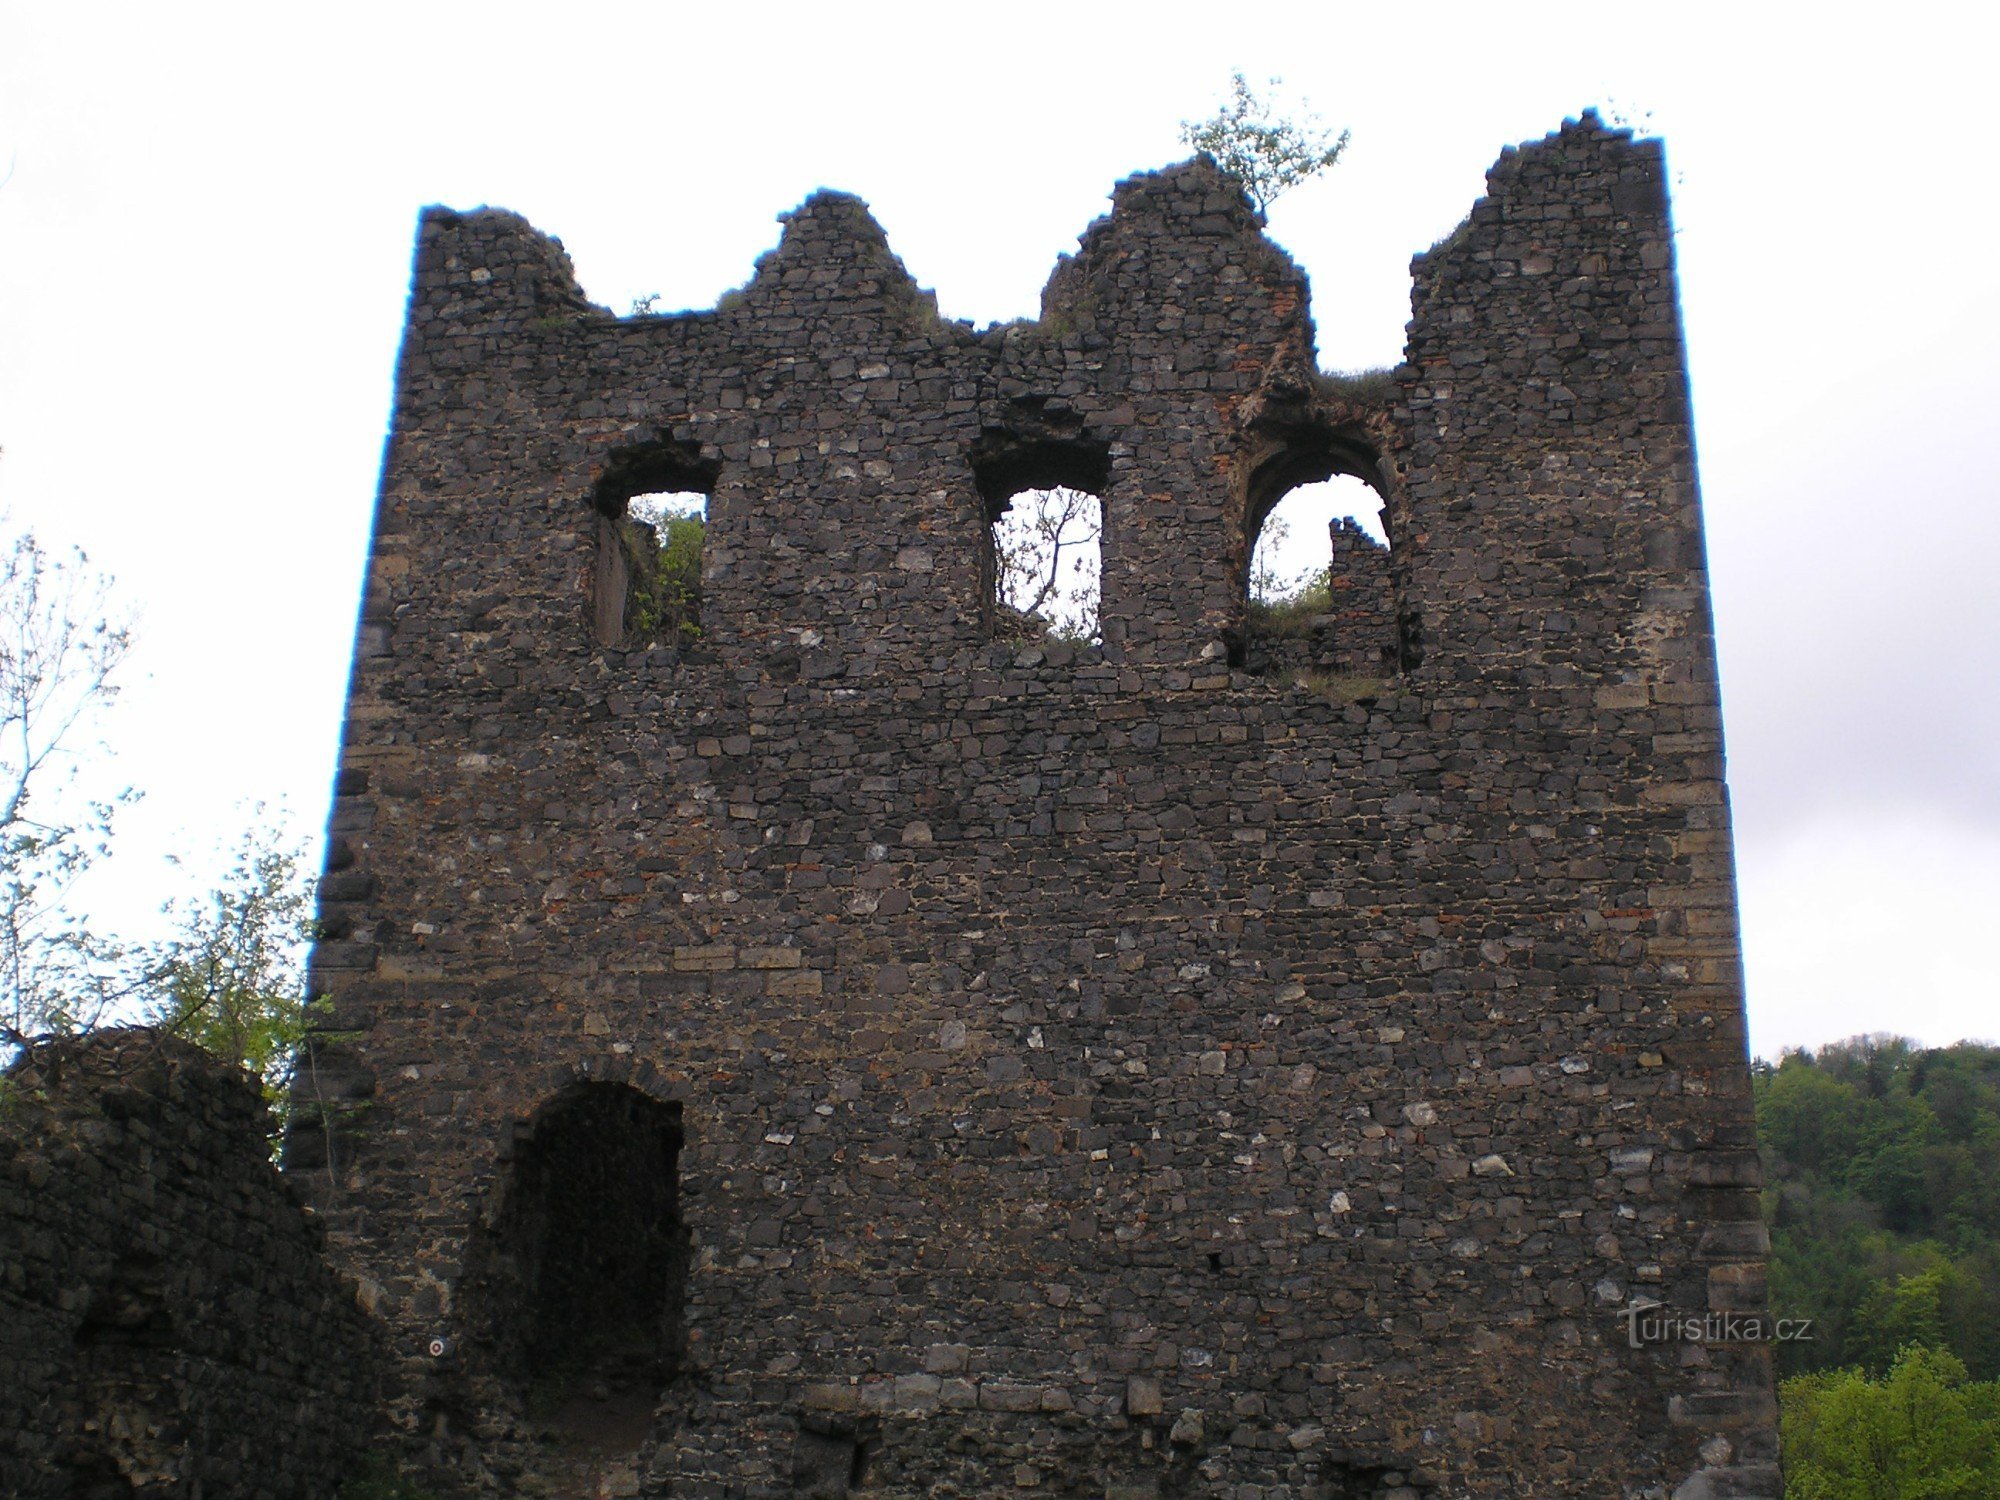 Lestkov ruins